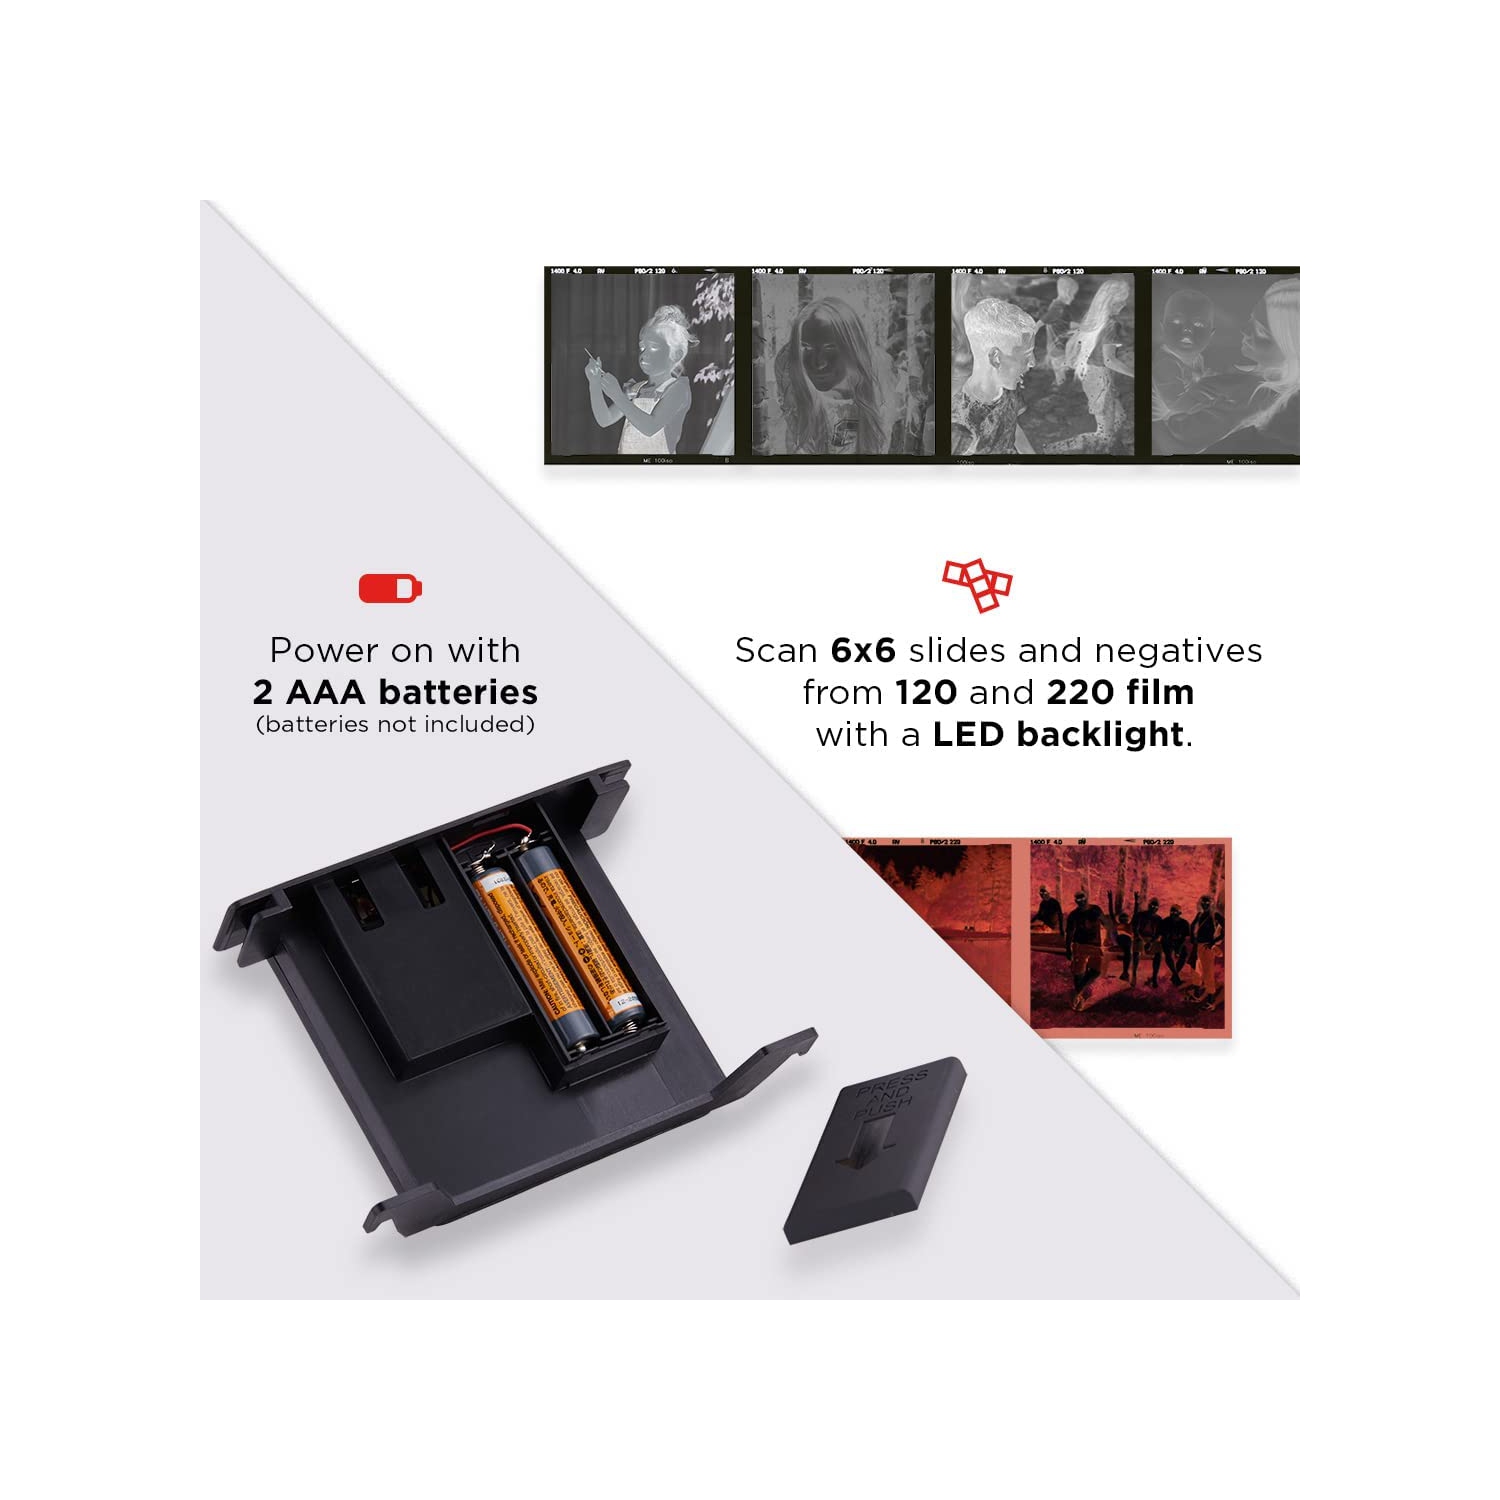 KODAK 6x6 Mobile Film Scanner, Convert and Save 6x6 Slides & Negatives